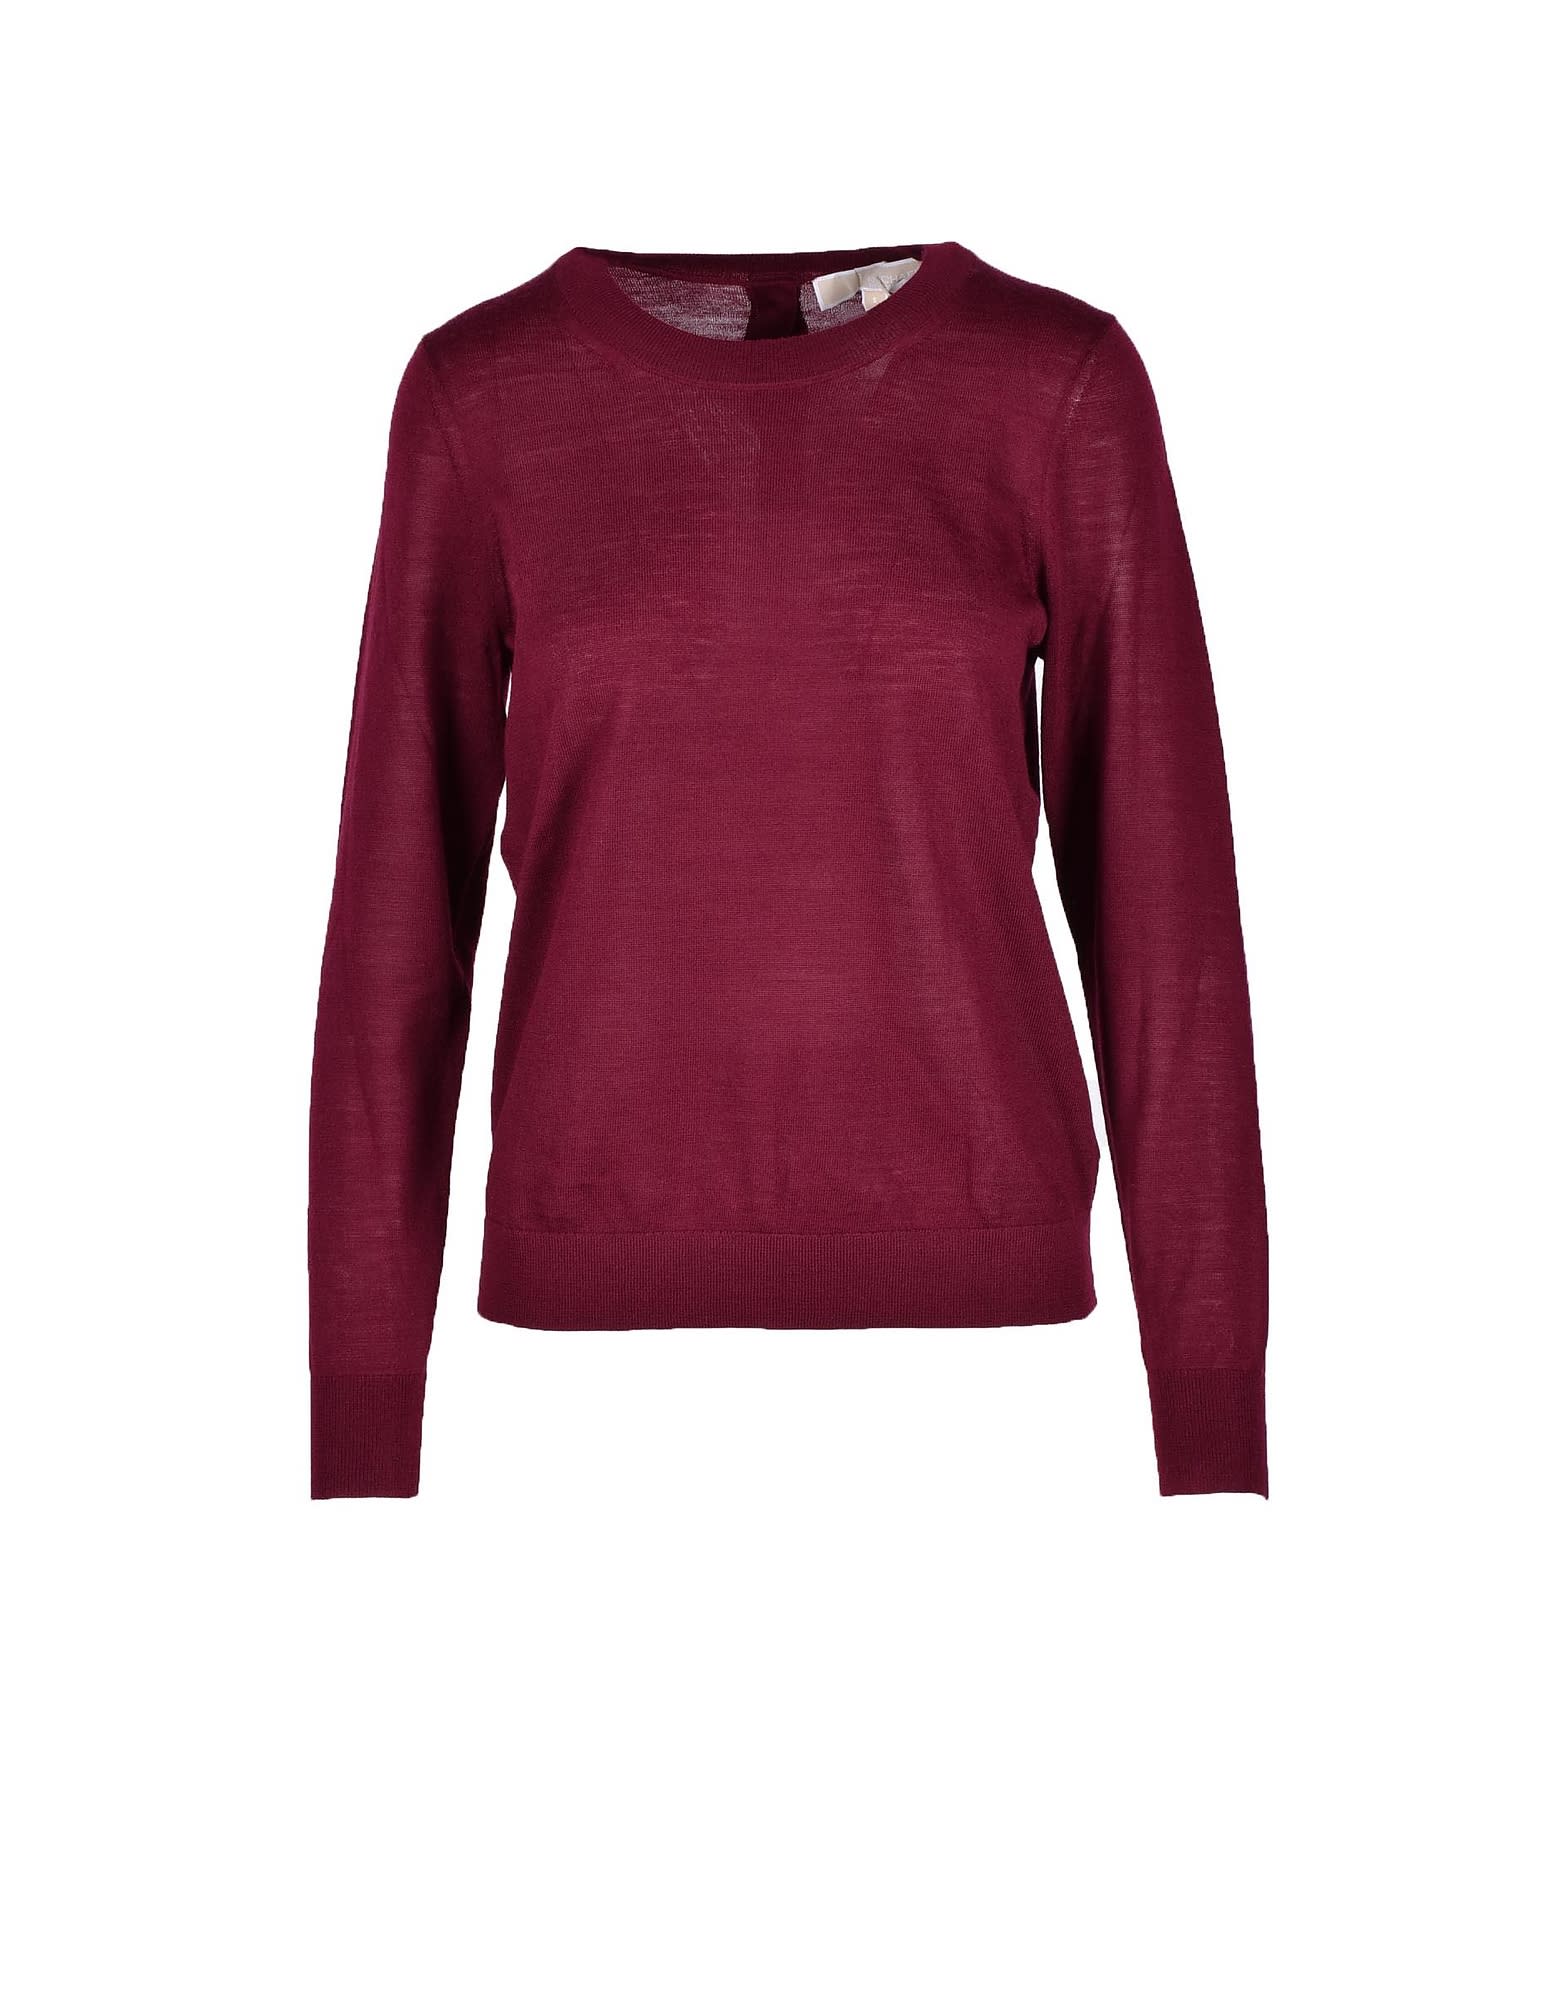 Michael Kors Womens Bordeaux Sweater